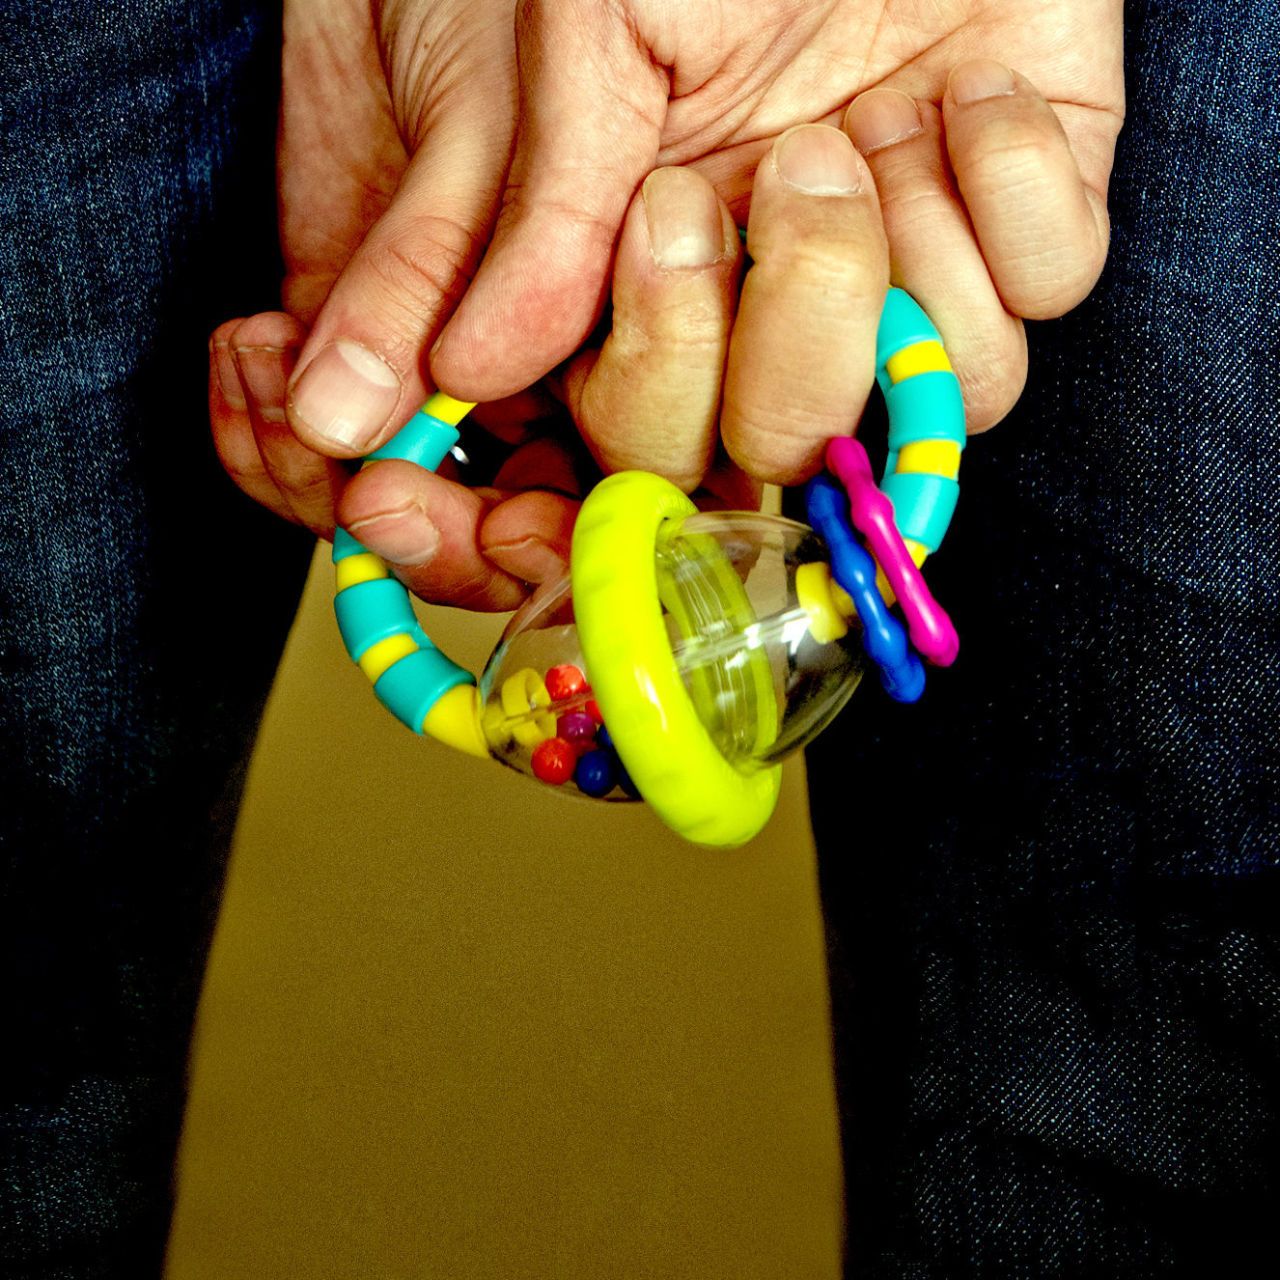 Finger, Nail, Colorfulness, Denim, Sweater, Bracelet, Candy, Button, Gesture, Pocket, 